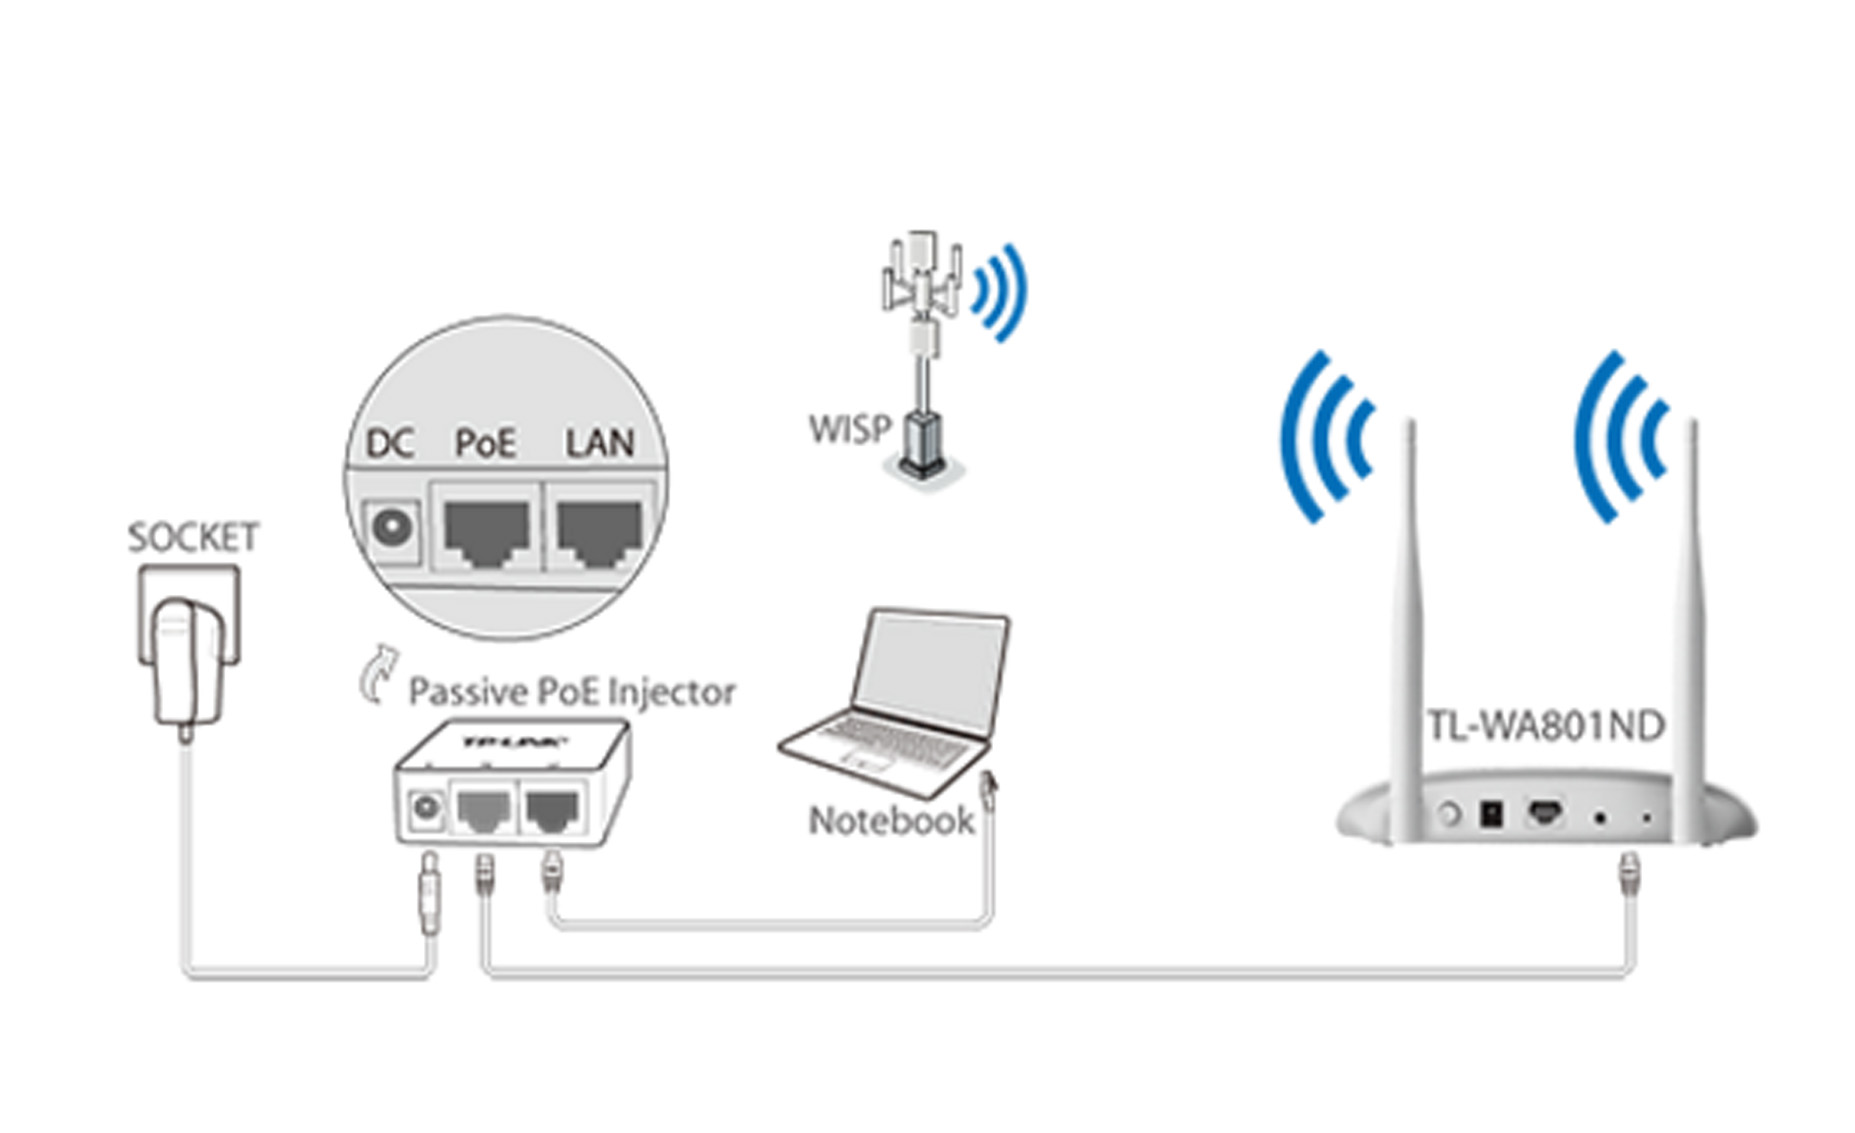 TP-Link TL-WA801ND: описание и обзор возможностей точки доступа